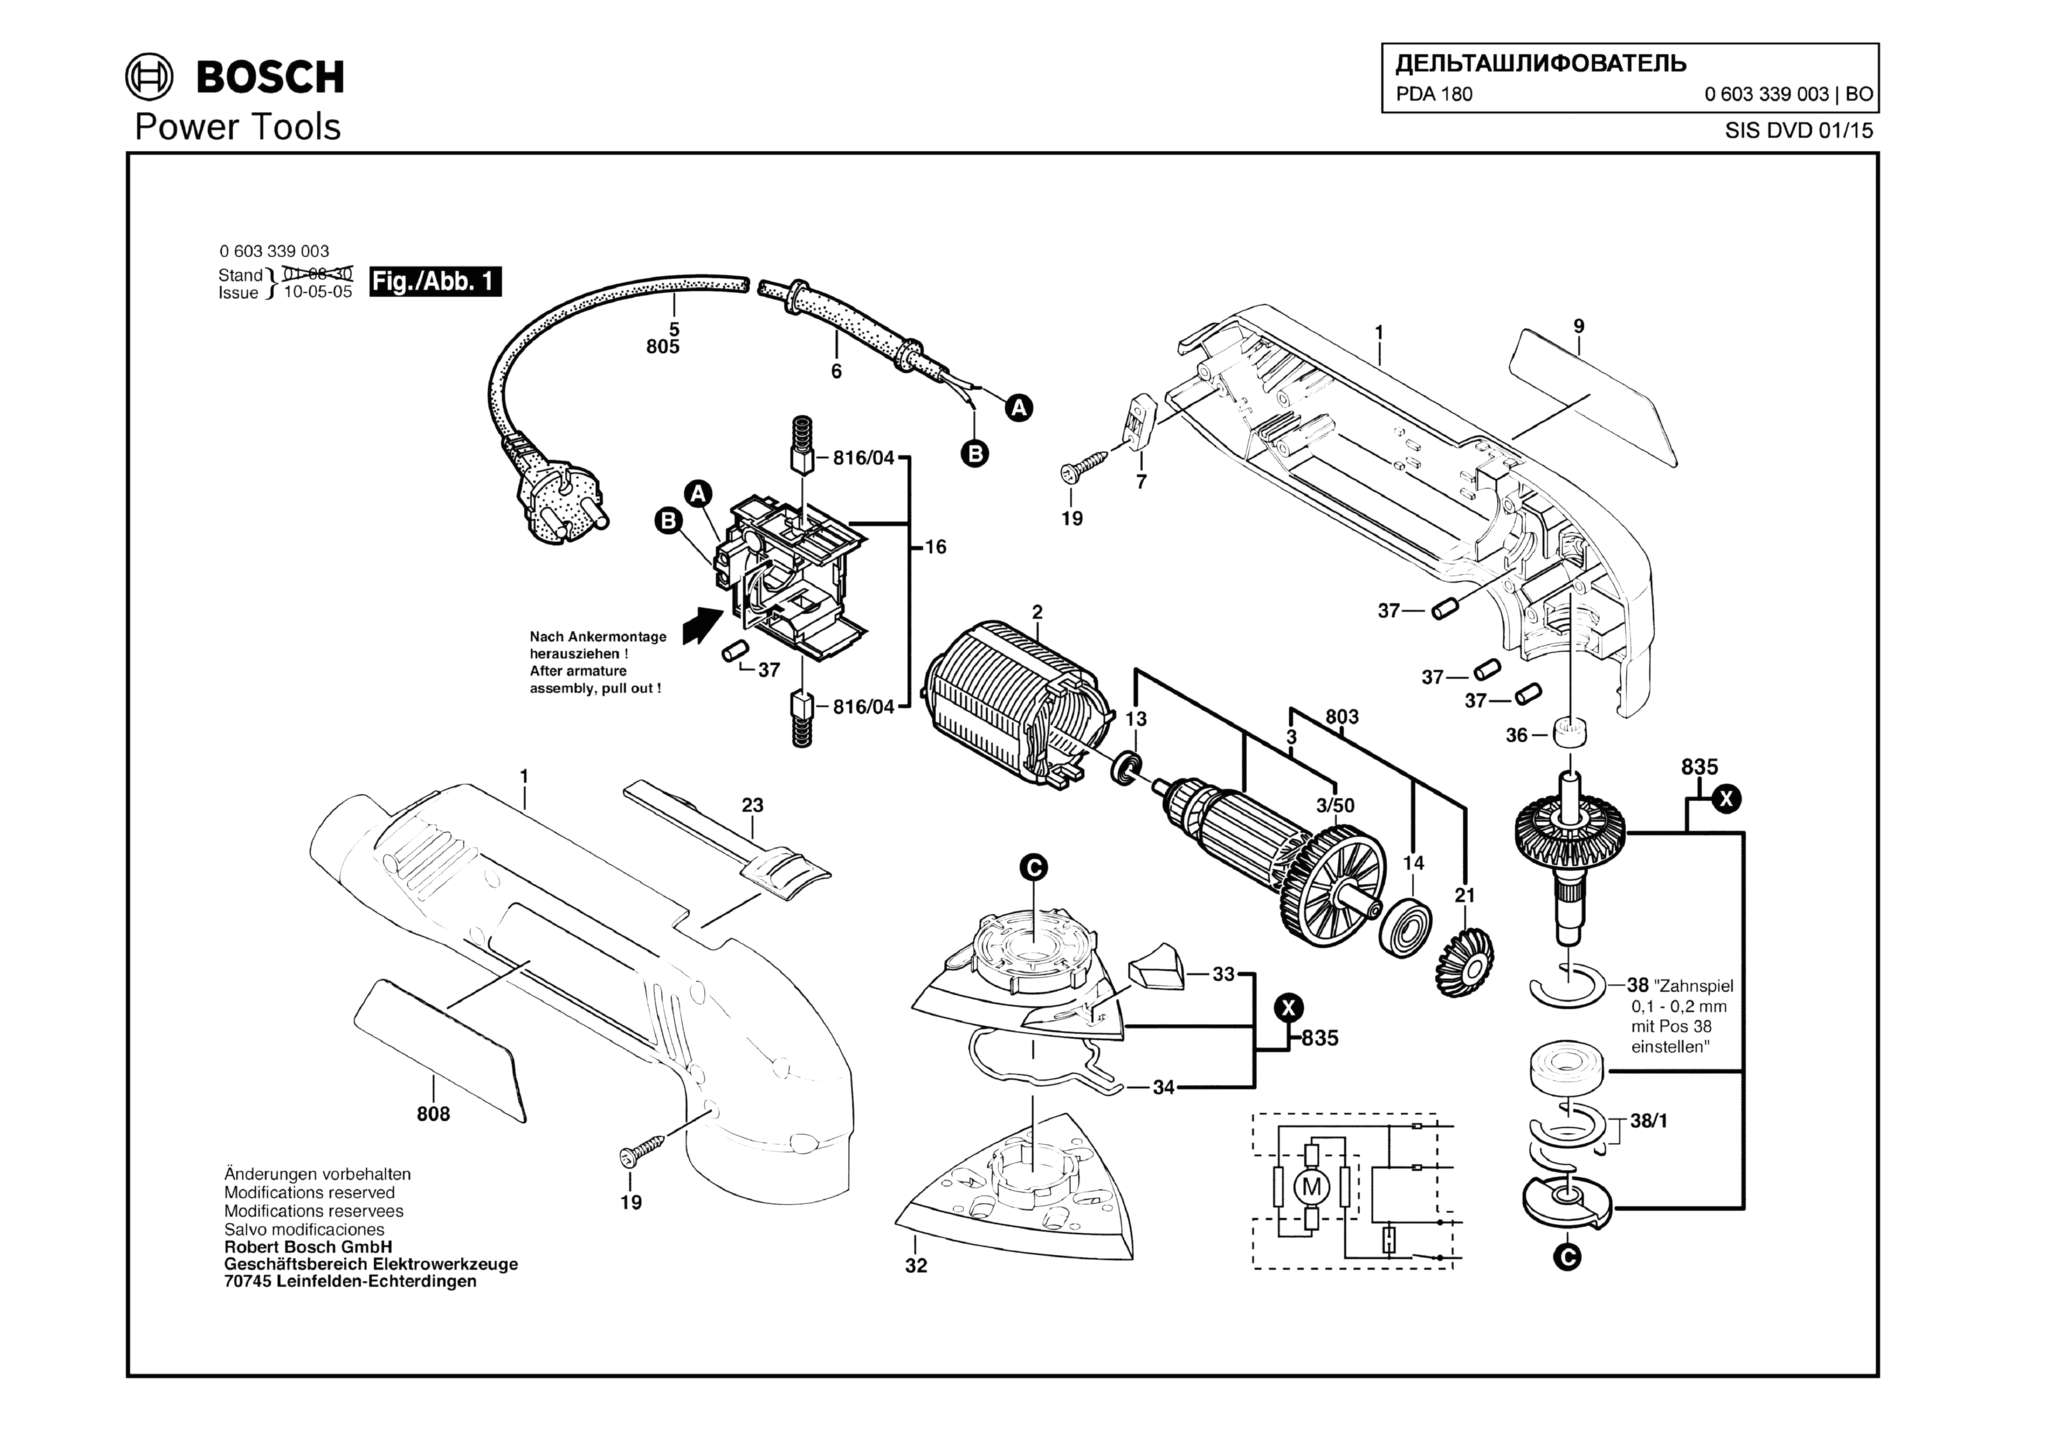 Запчасти, схема и деталировка Bosch PDA 180 (ТИП 0603339003)